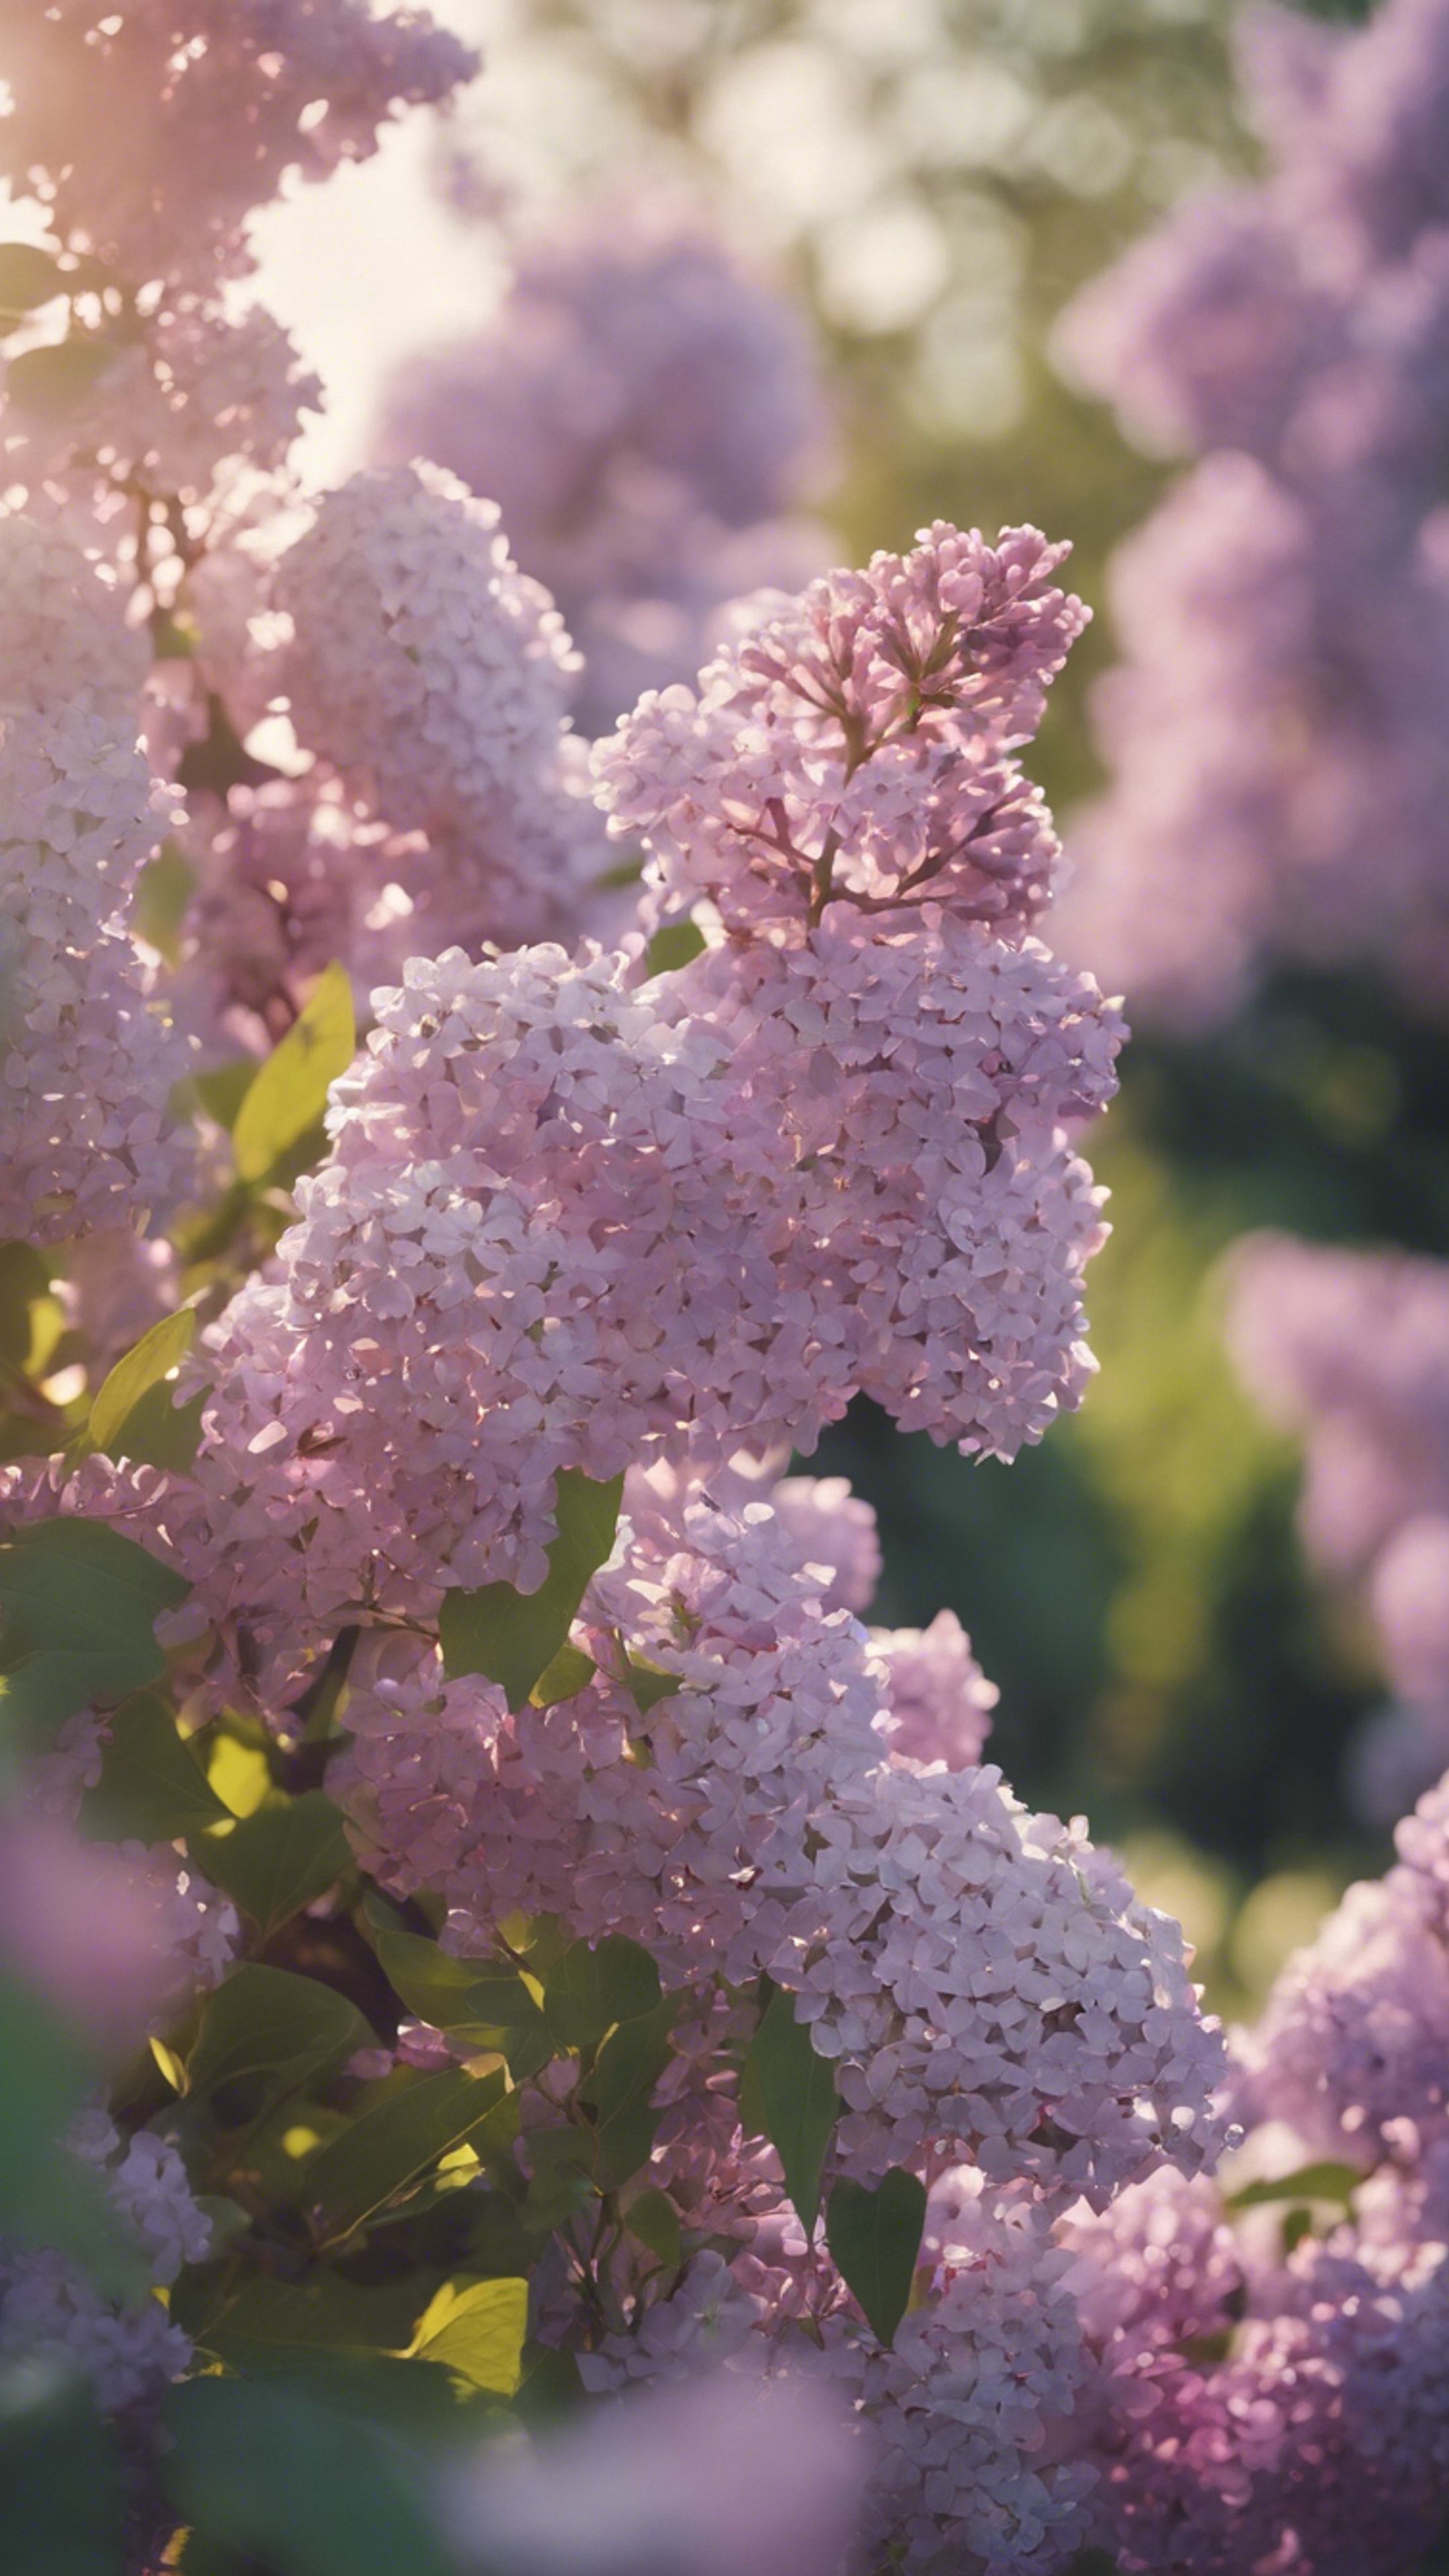 A bountiful garden full of preppy lilac flowers in full bloom under soft sunlight. Hình nền[535239431e6946dc9128]